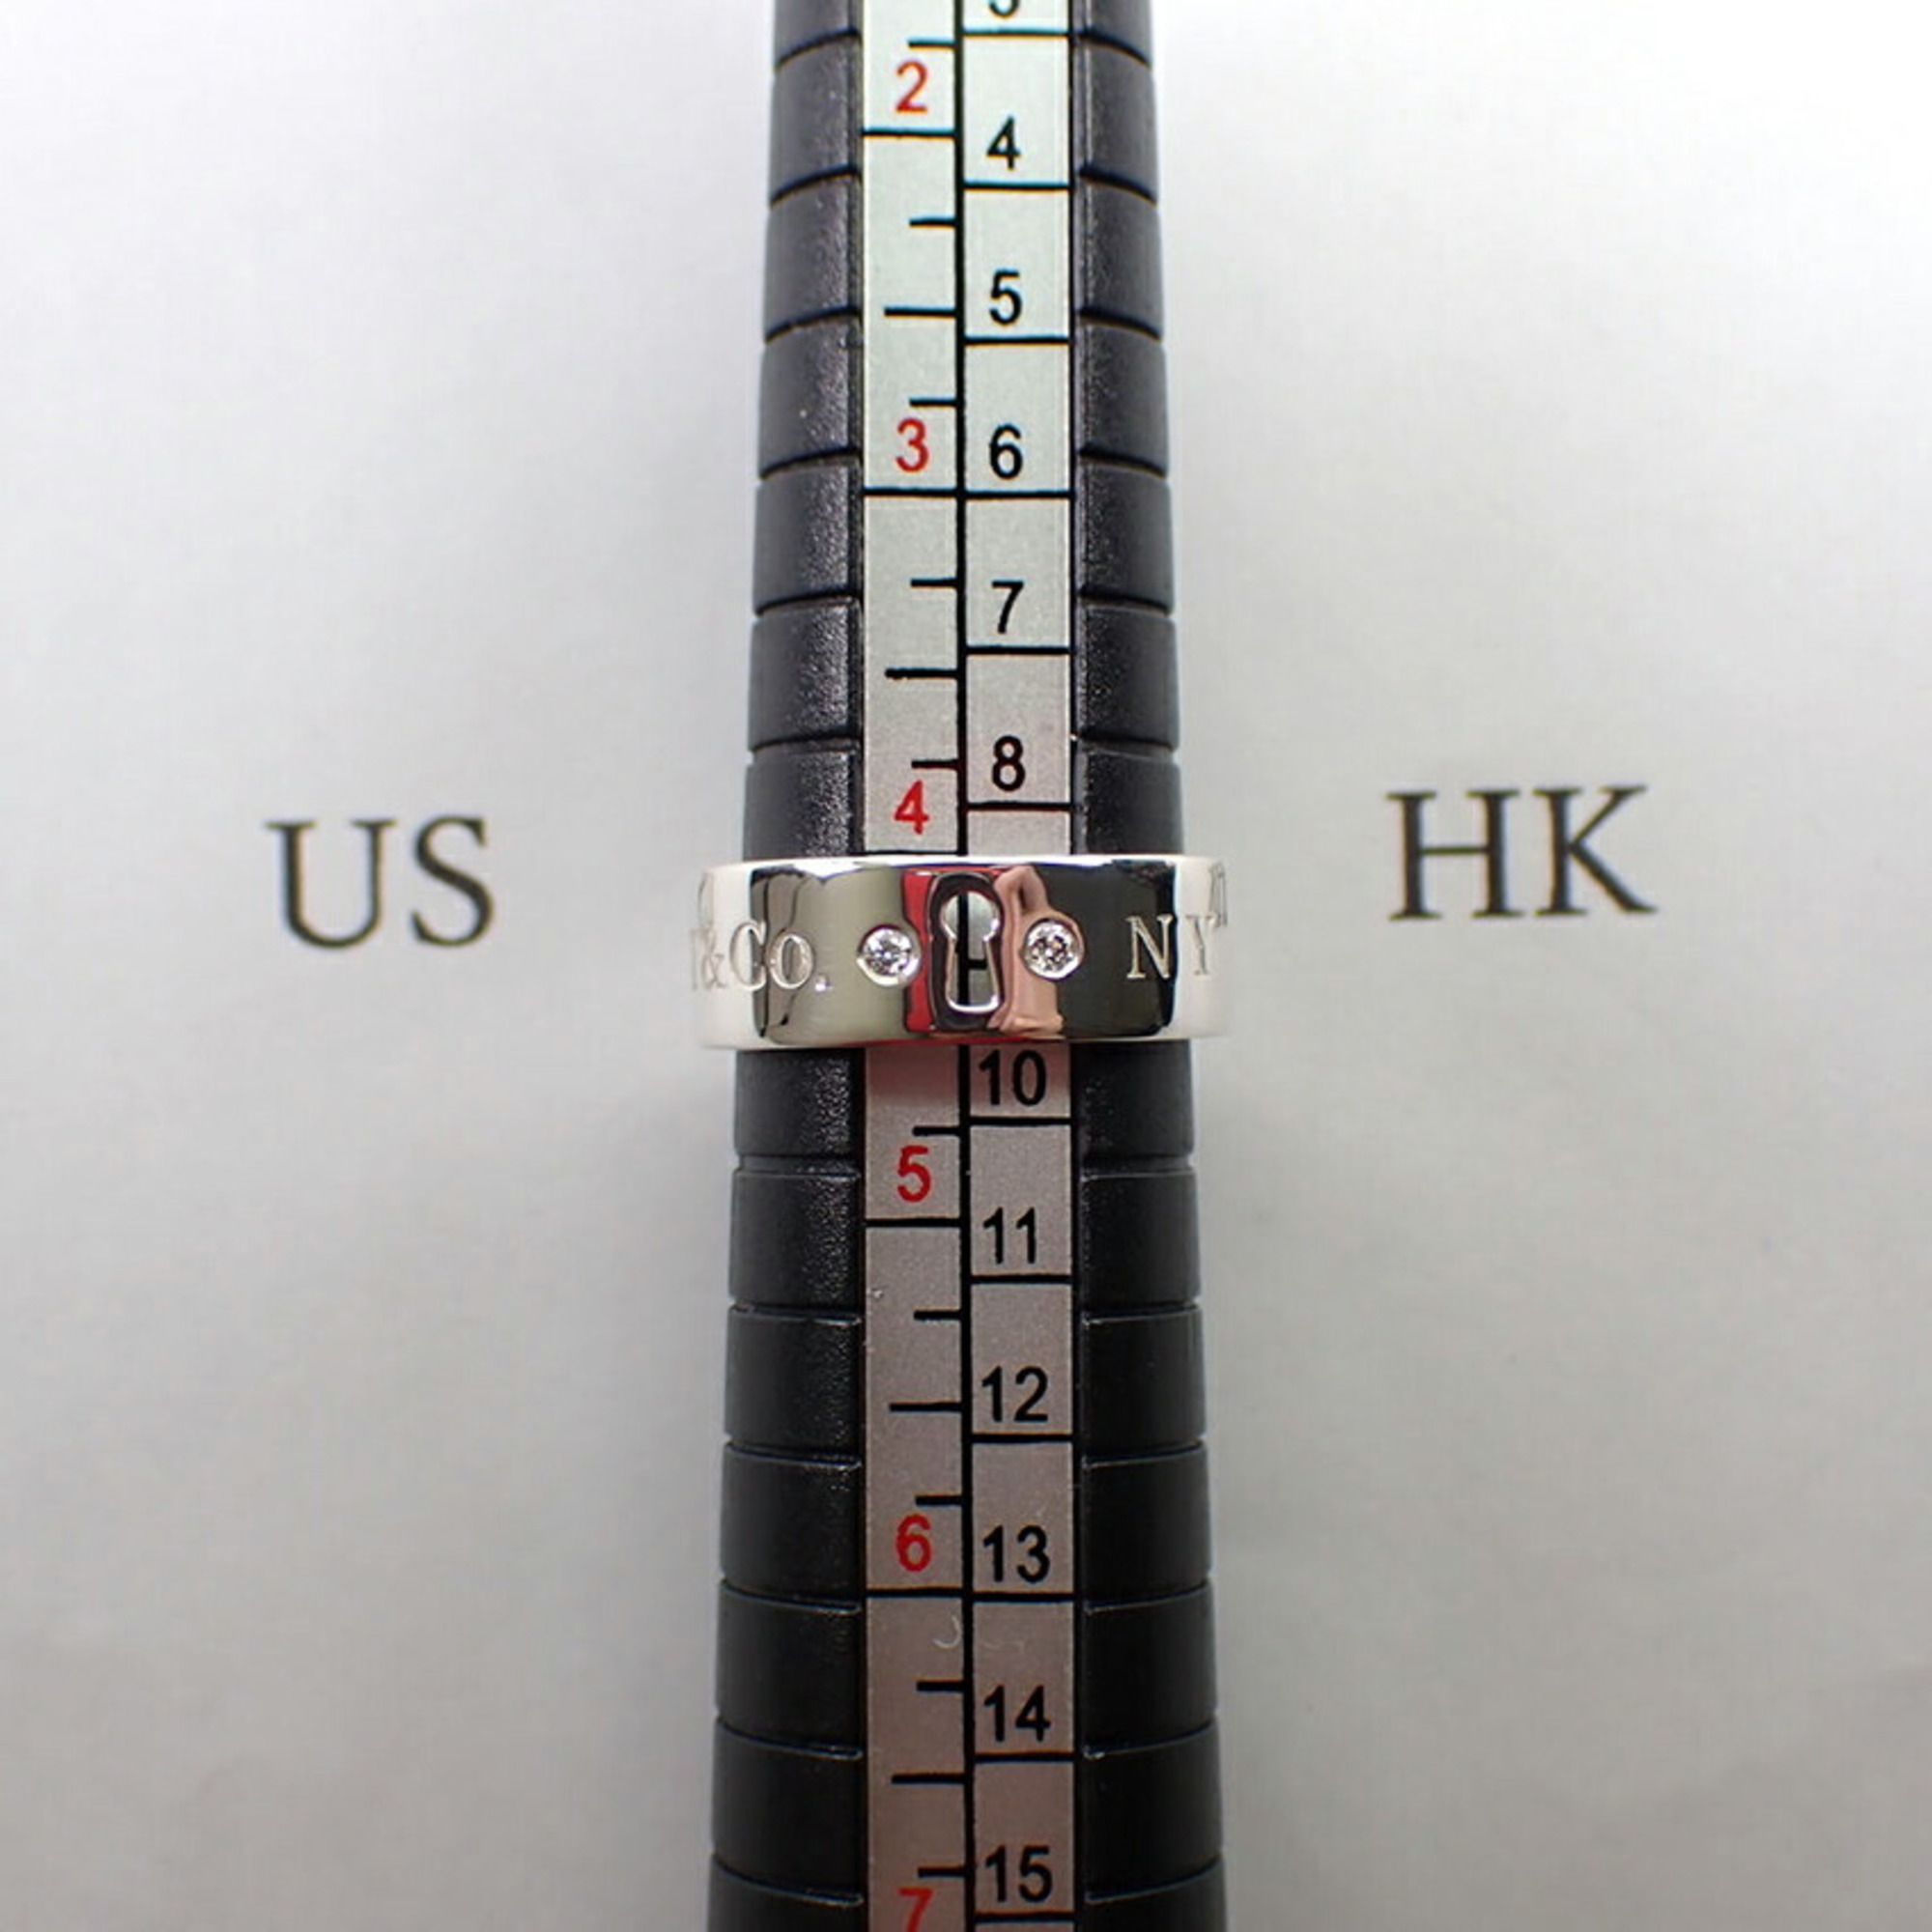 TIFFANY 925 Diamond Rock Ring Size 7.5